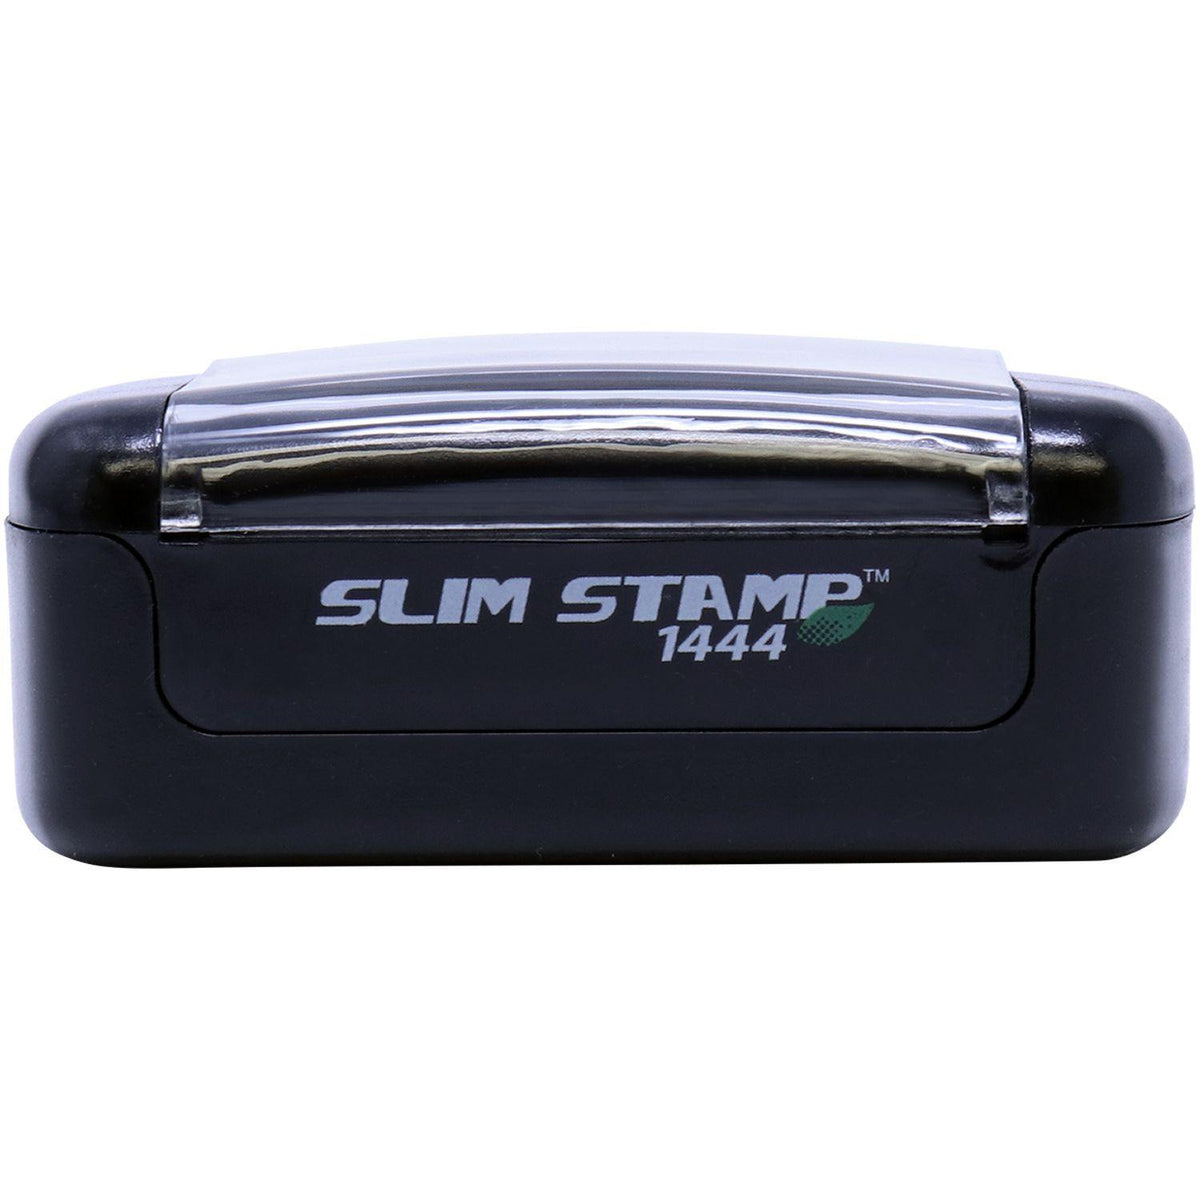 Slim Pre-Inked Atencion Inmediata Stamp - Engineer Seal Stamps - Brand_Slim, Impression Size_Small, Stamp Type_Pre-Inked Stamp, Type of Use_Office, Type of Use_Professional